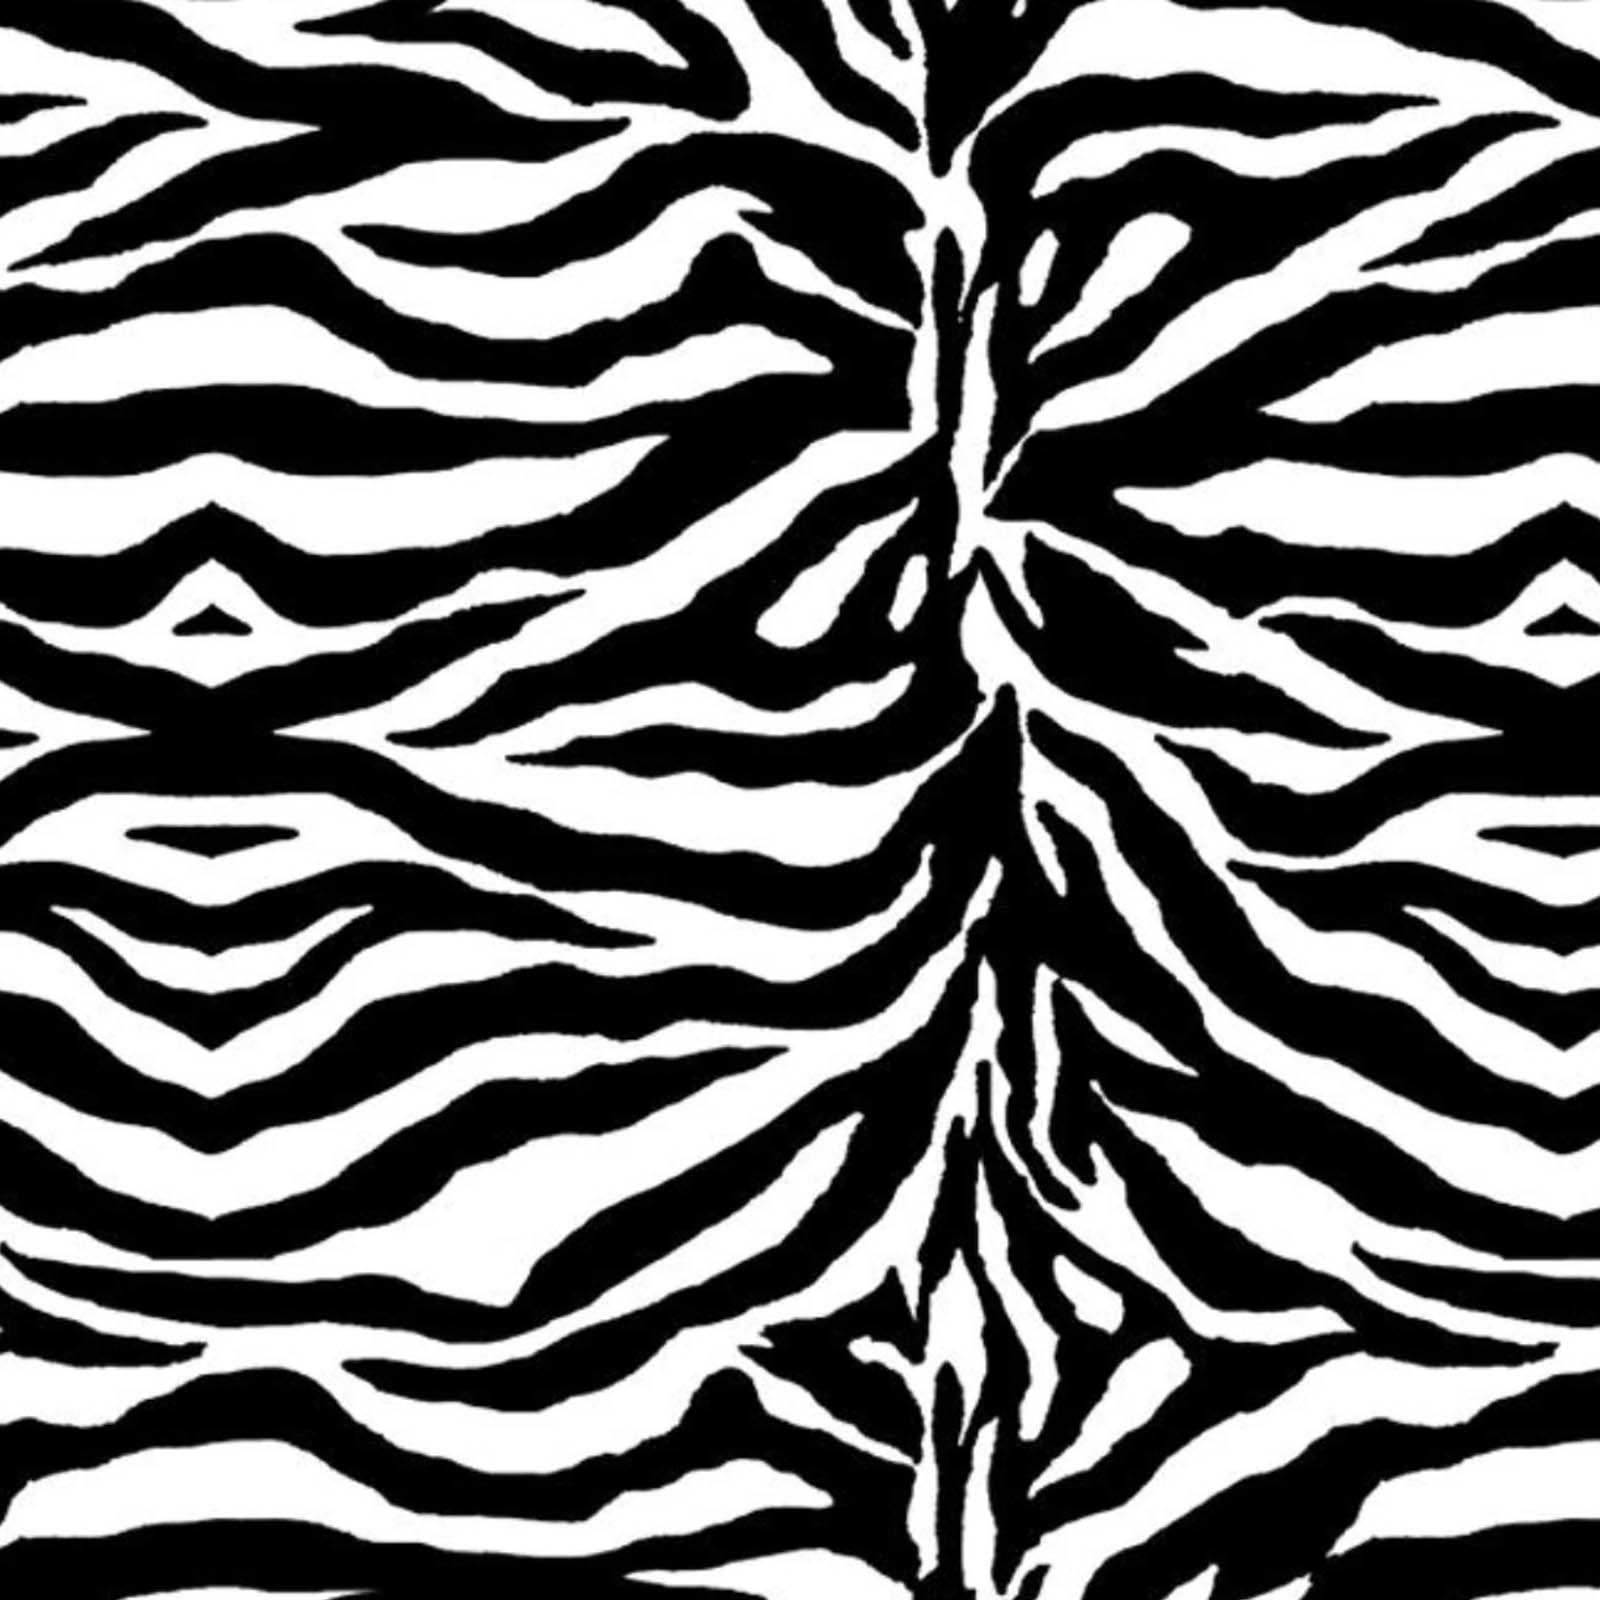 Zebra Fabric Fleece with Black